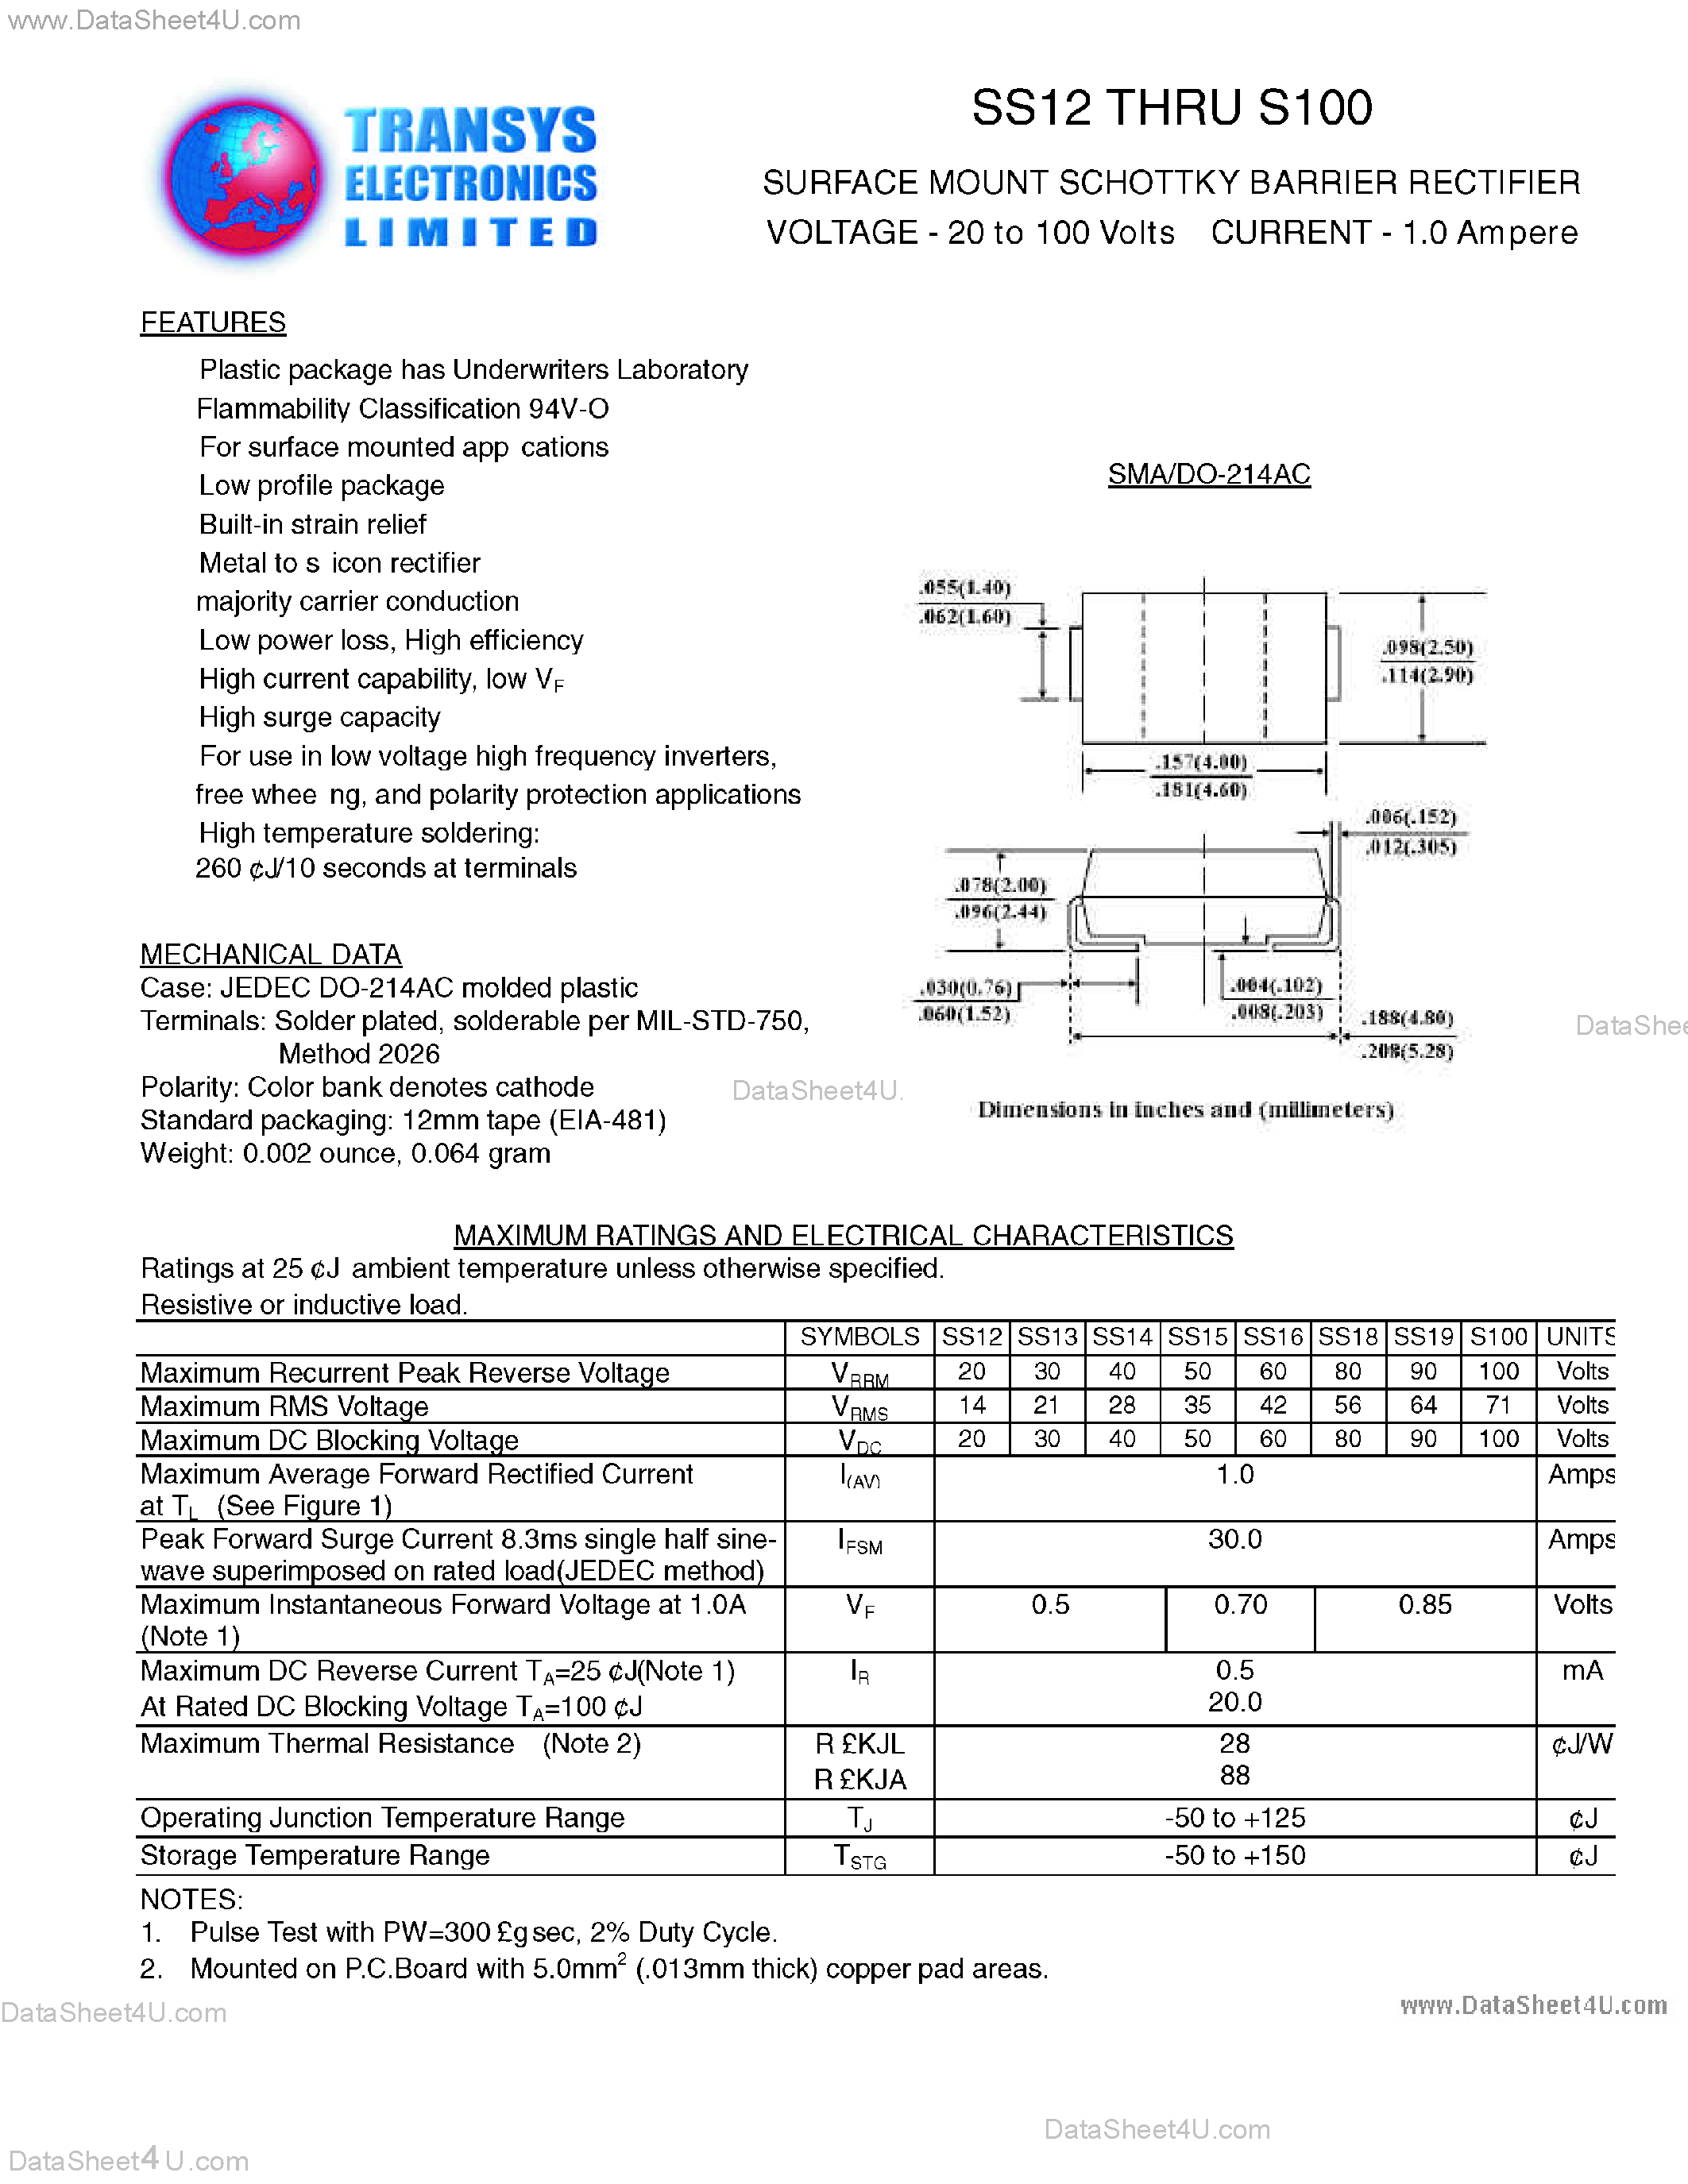 Datasheet SS100 - (SS12 - SS100) SURFACE MOUNT SCHOTTKY BARRIER RECTIFIER page 1